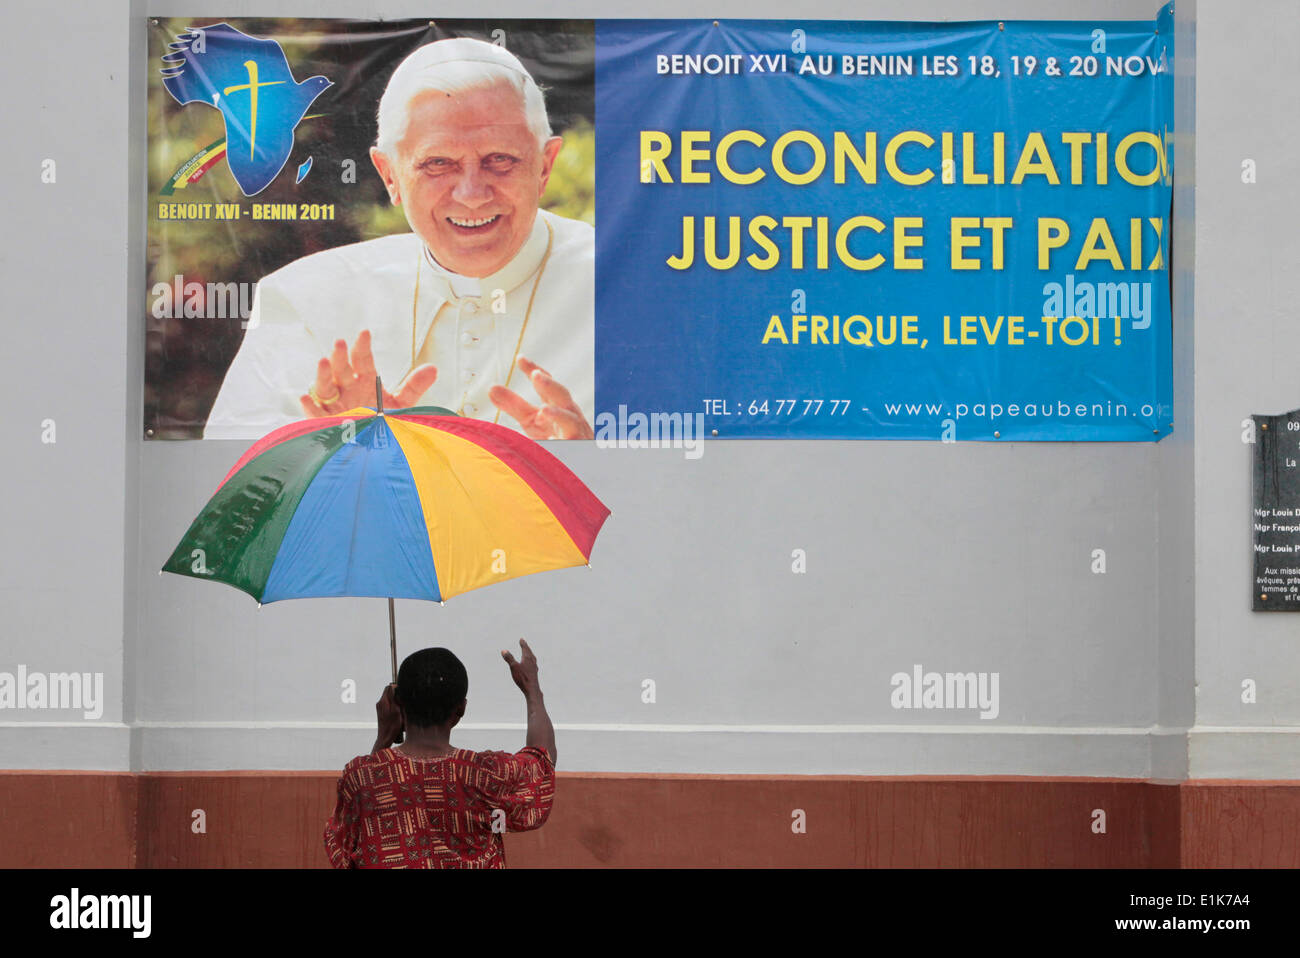 La visita del Papa Benedicto XVI a Benin poster Foto de stock